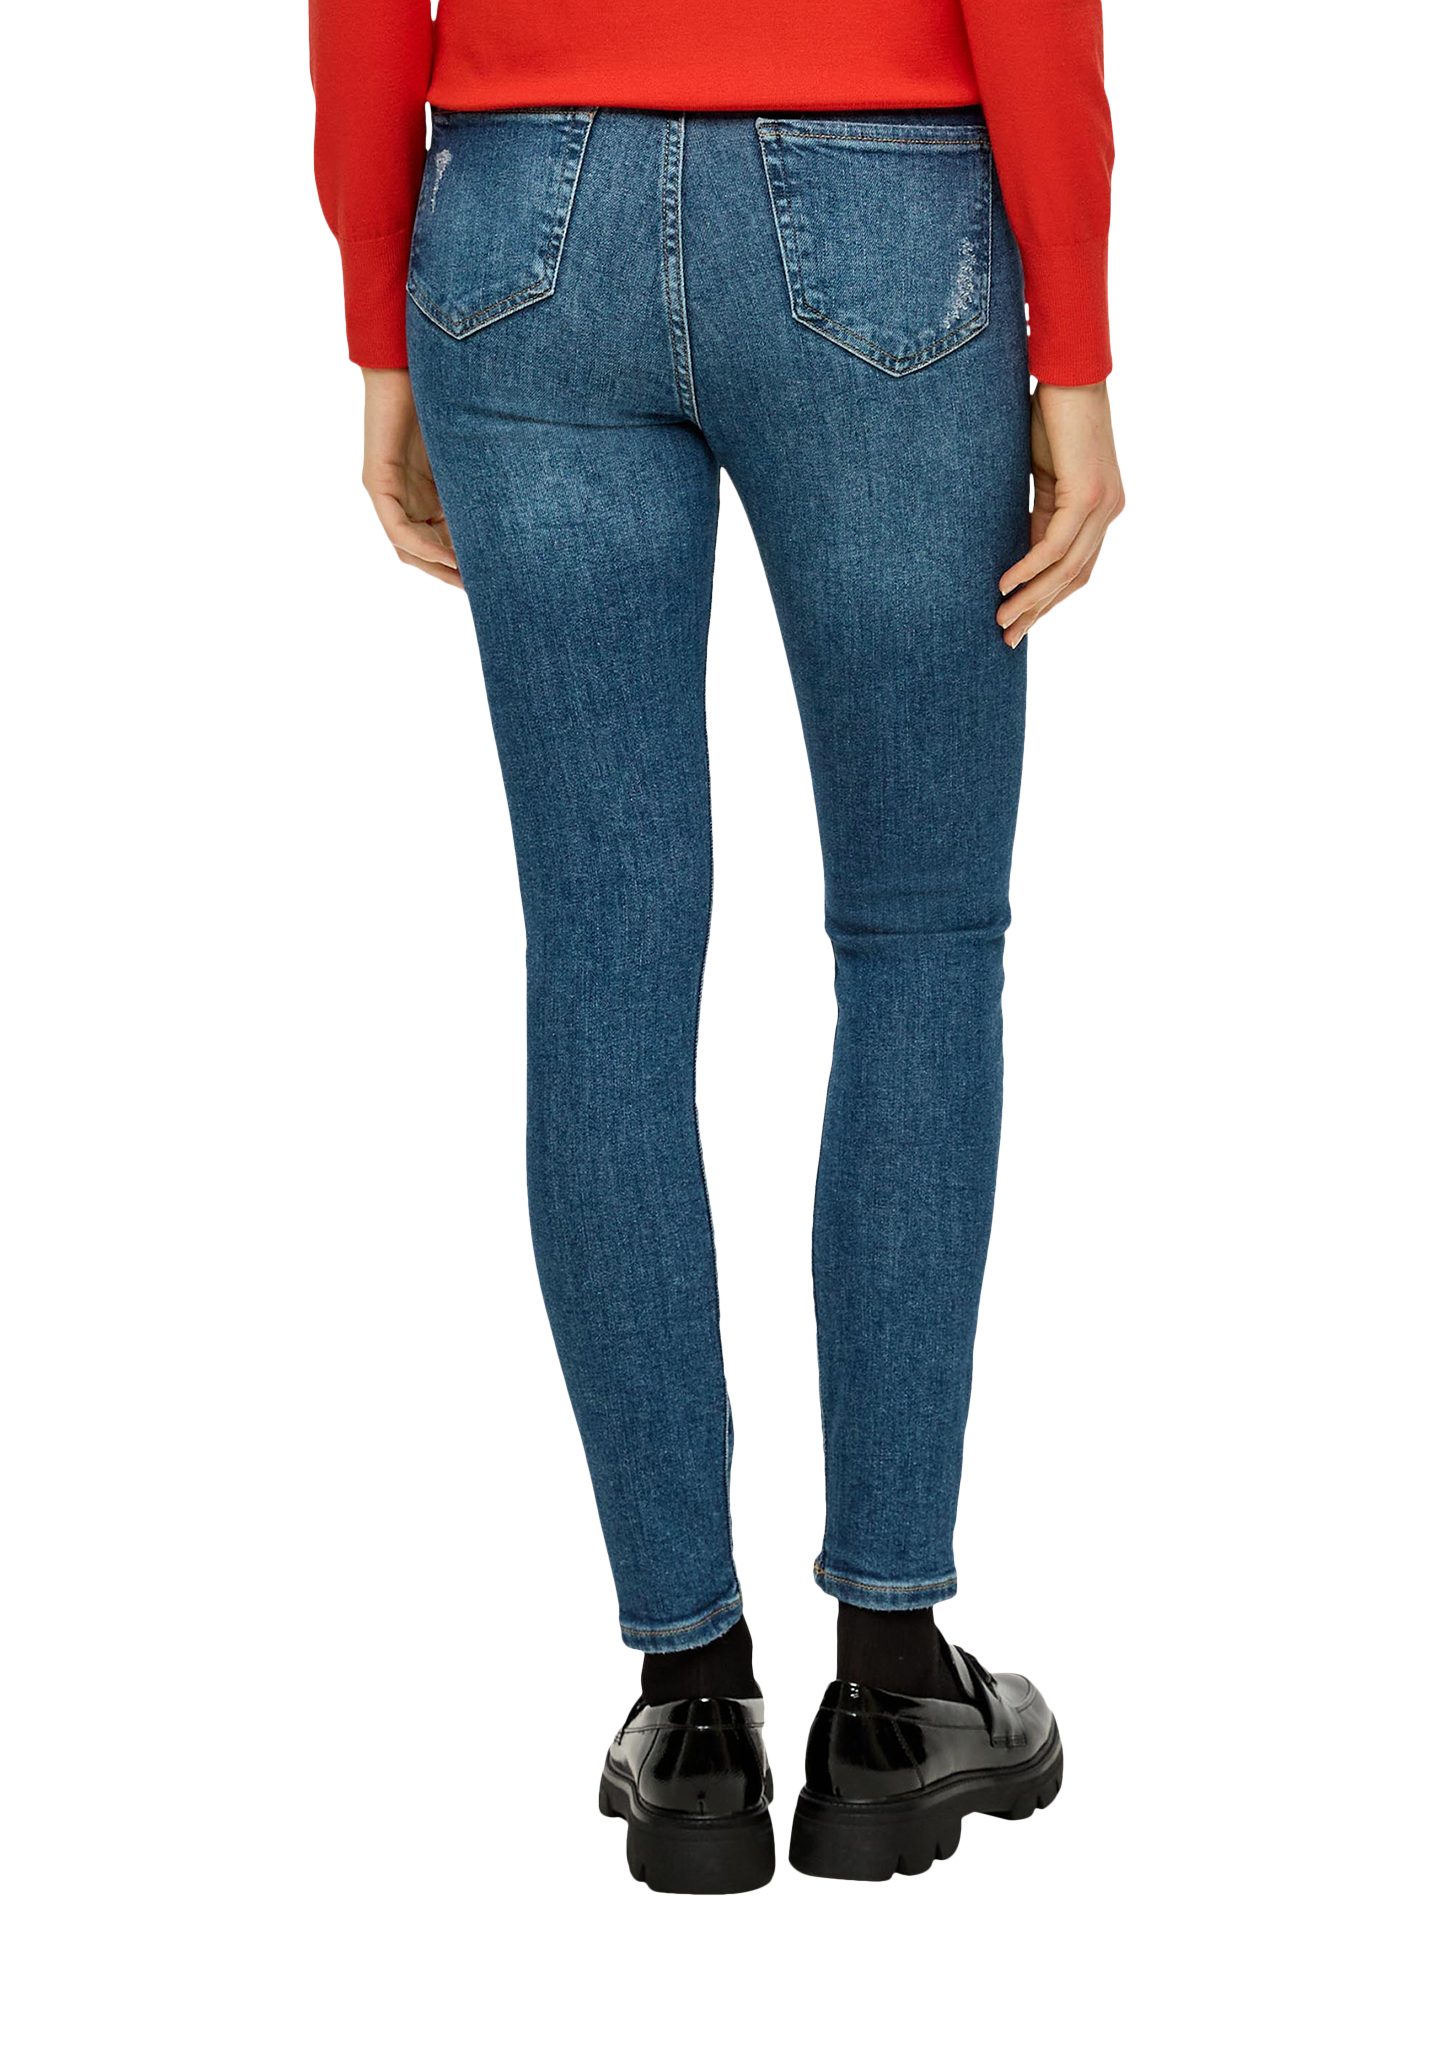 Waschung / Nieten, Leder-Patch, / Fit High s.Oliver 7/8-Jeans Leg blau / Izabell Skinny Jeans Rise Skinny